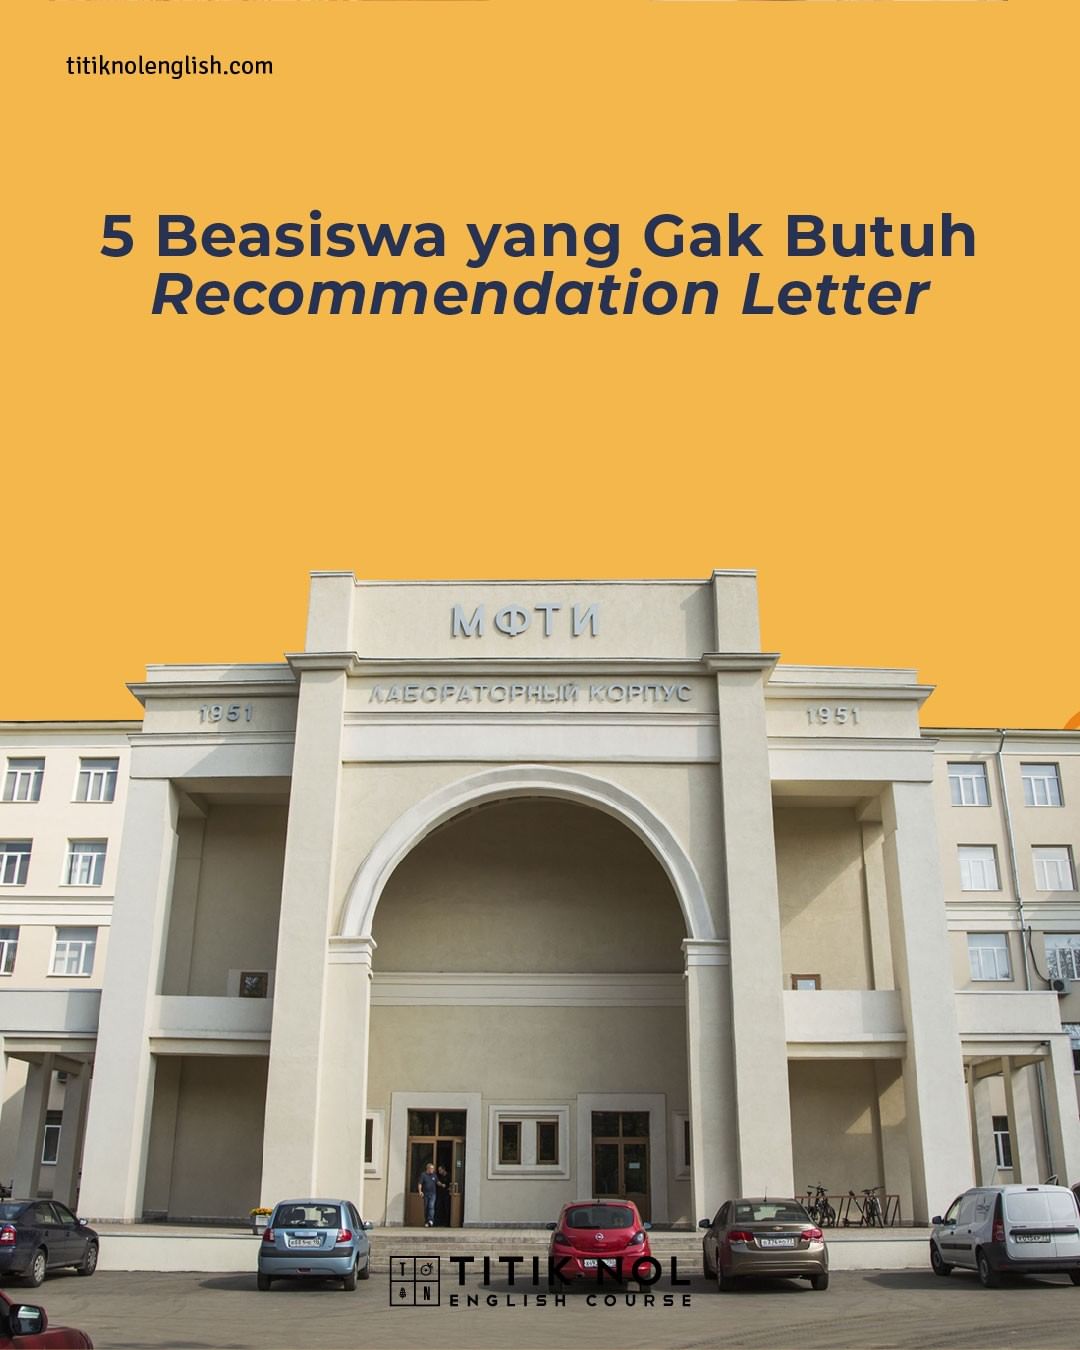 Beasiswa yang Gak Butuh Recommendation Letter